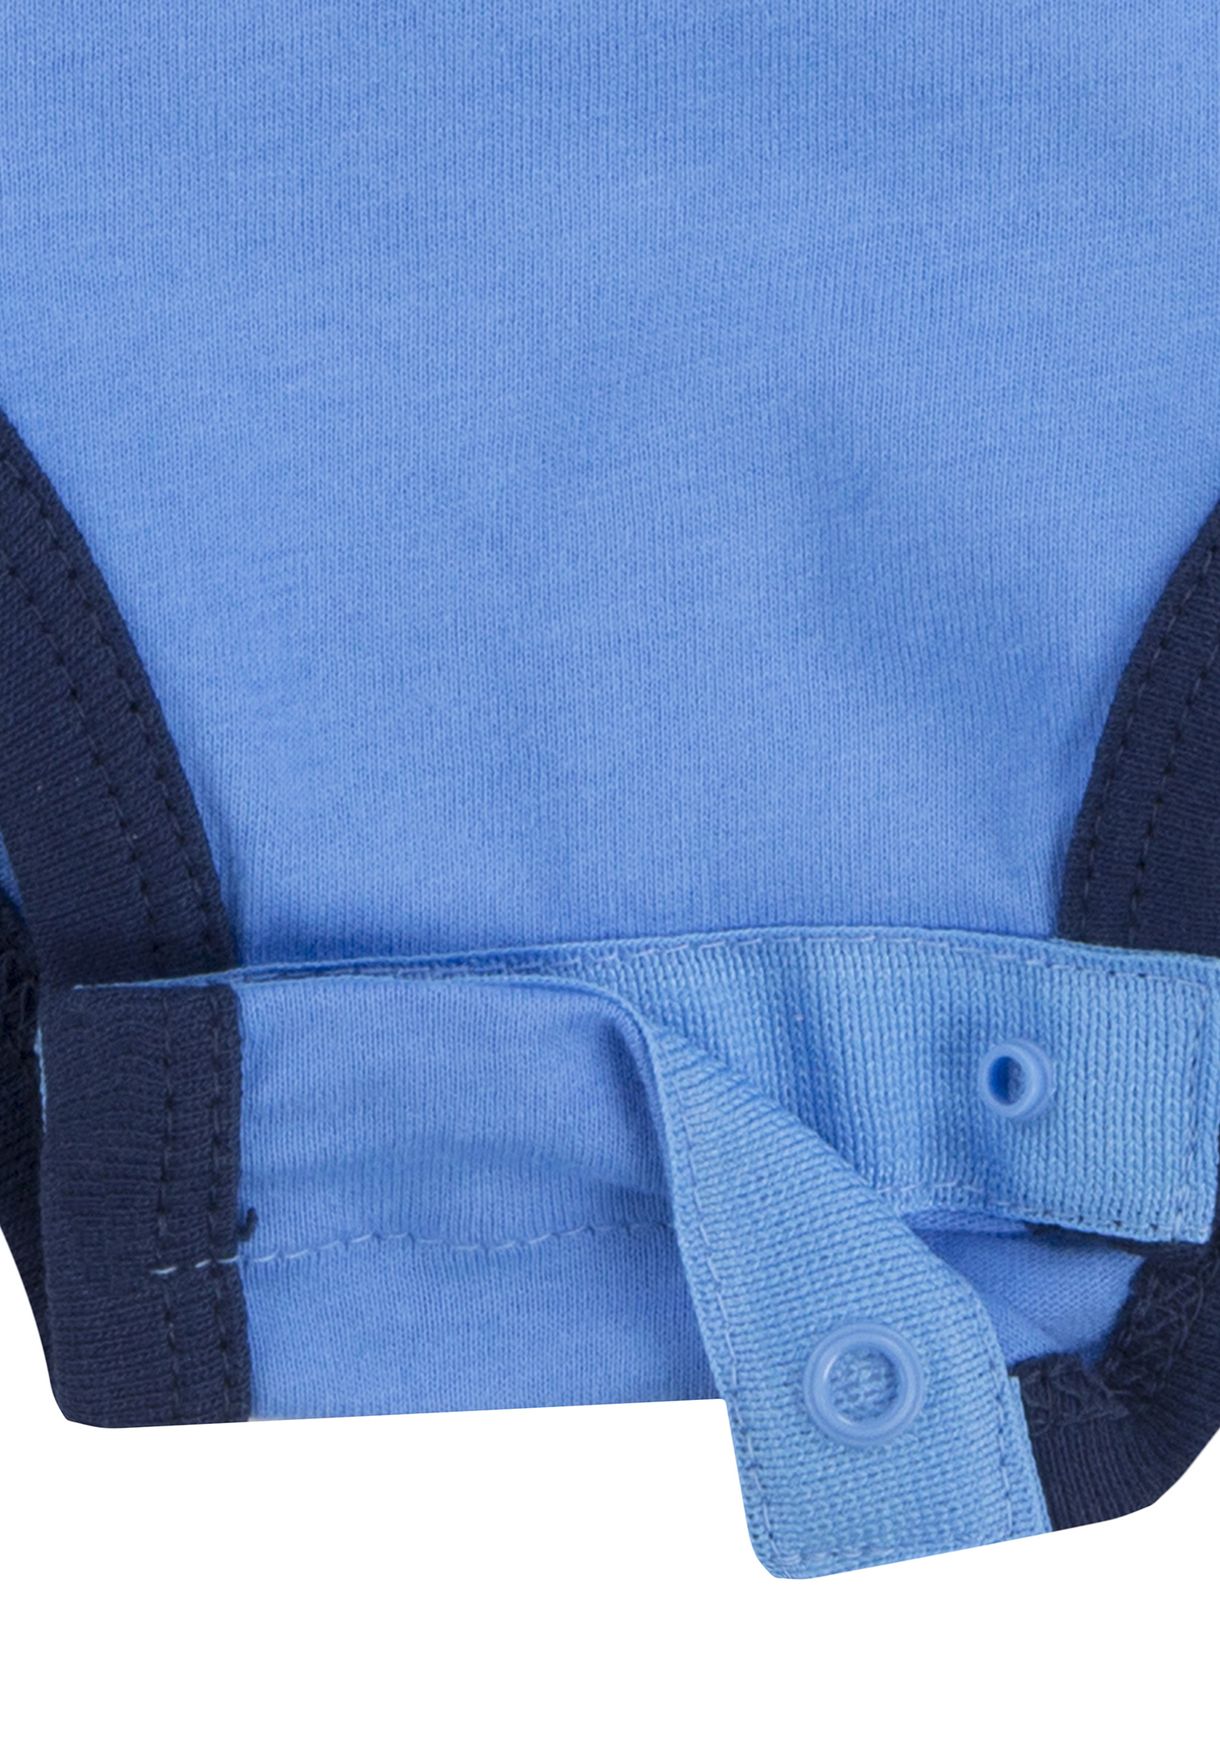 Infant 3 Pack Bodysuits